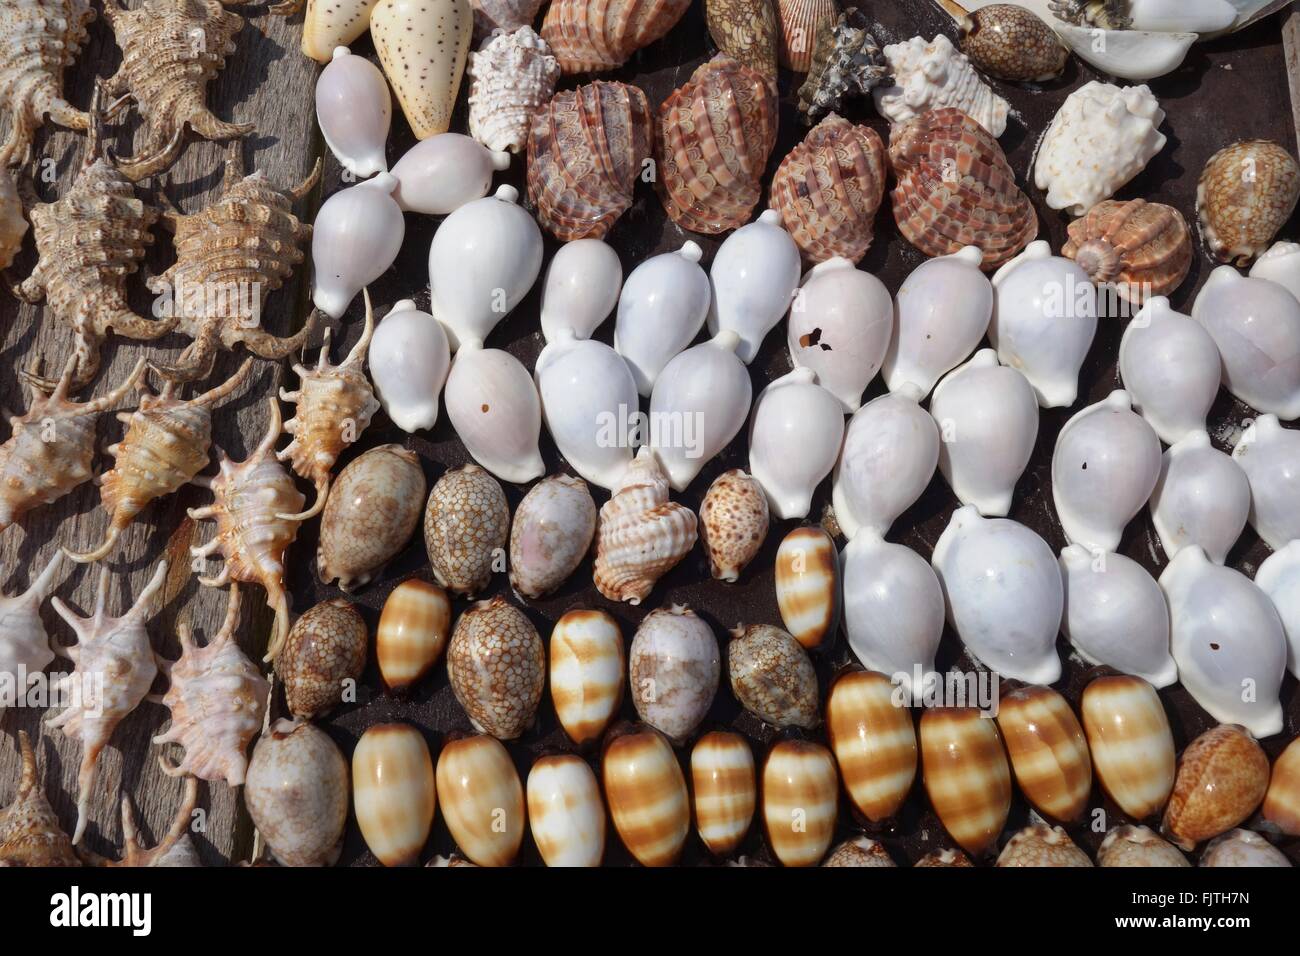 Cowry and other Indian Ocean shells in Zanzibar Stock Photo